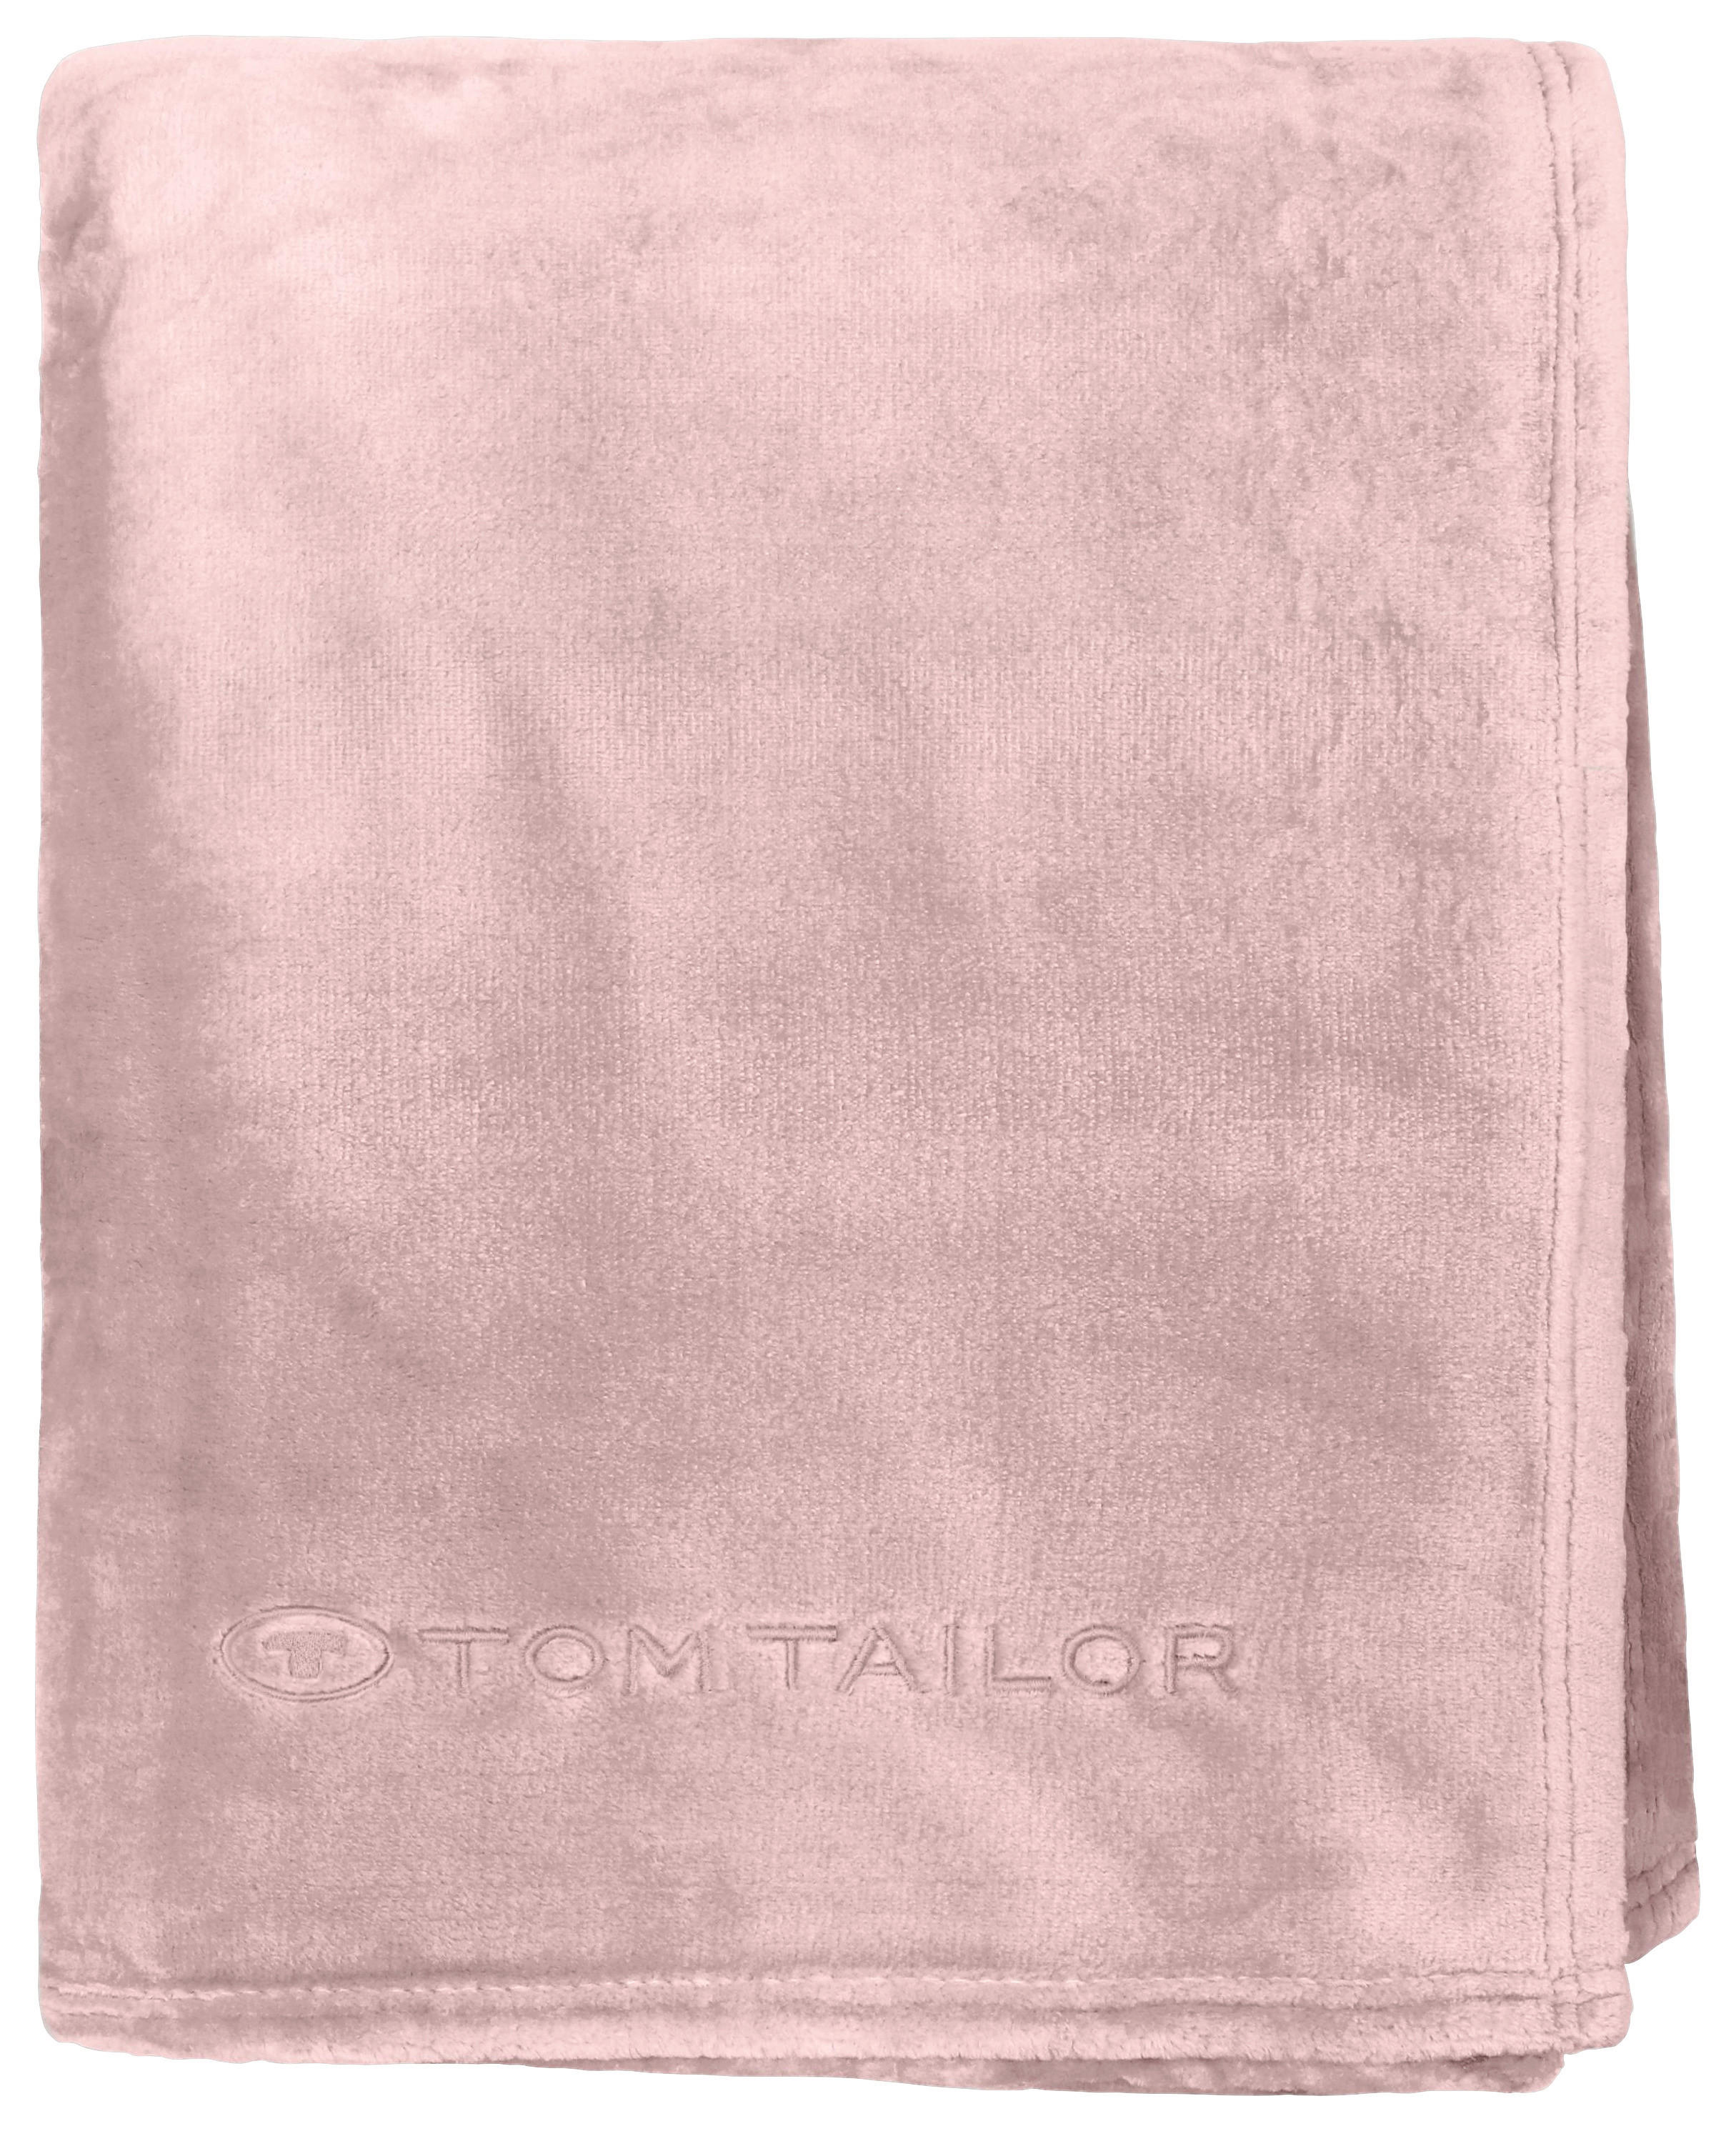 WOHNDECKE 237798 150X200 Rosa  - Rosa, KONVENTIONELL, Textil (40/40/10cm) - Tom Tailor